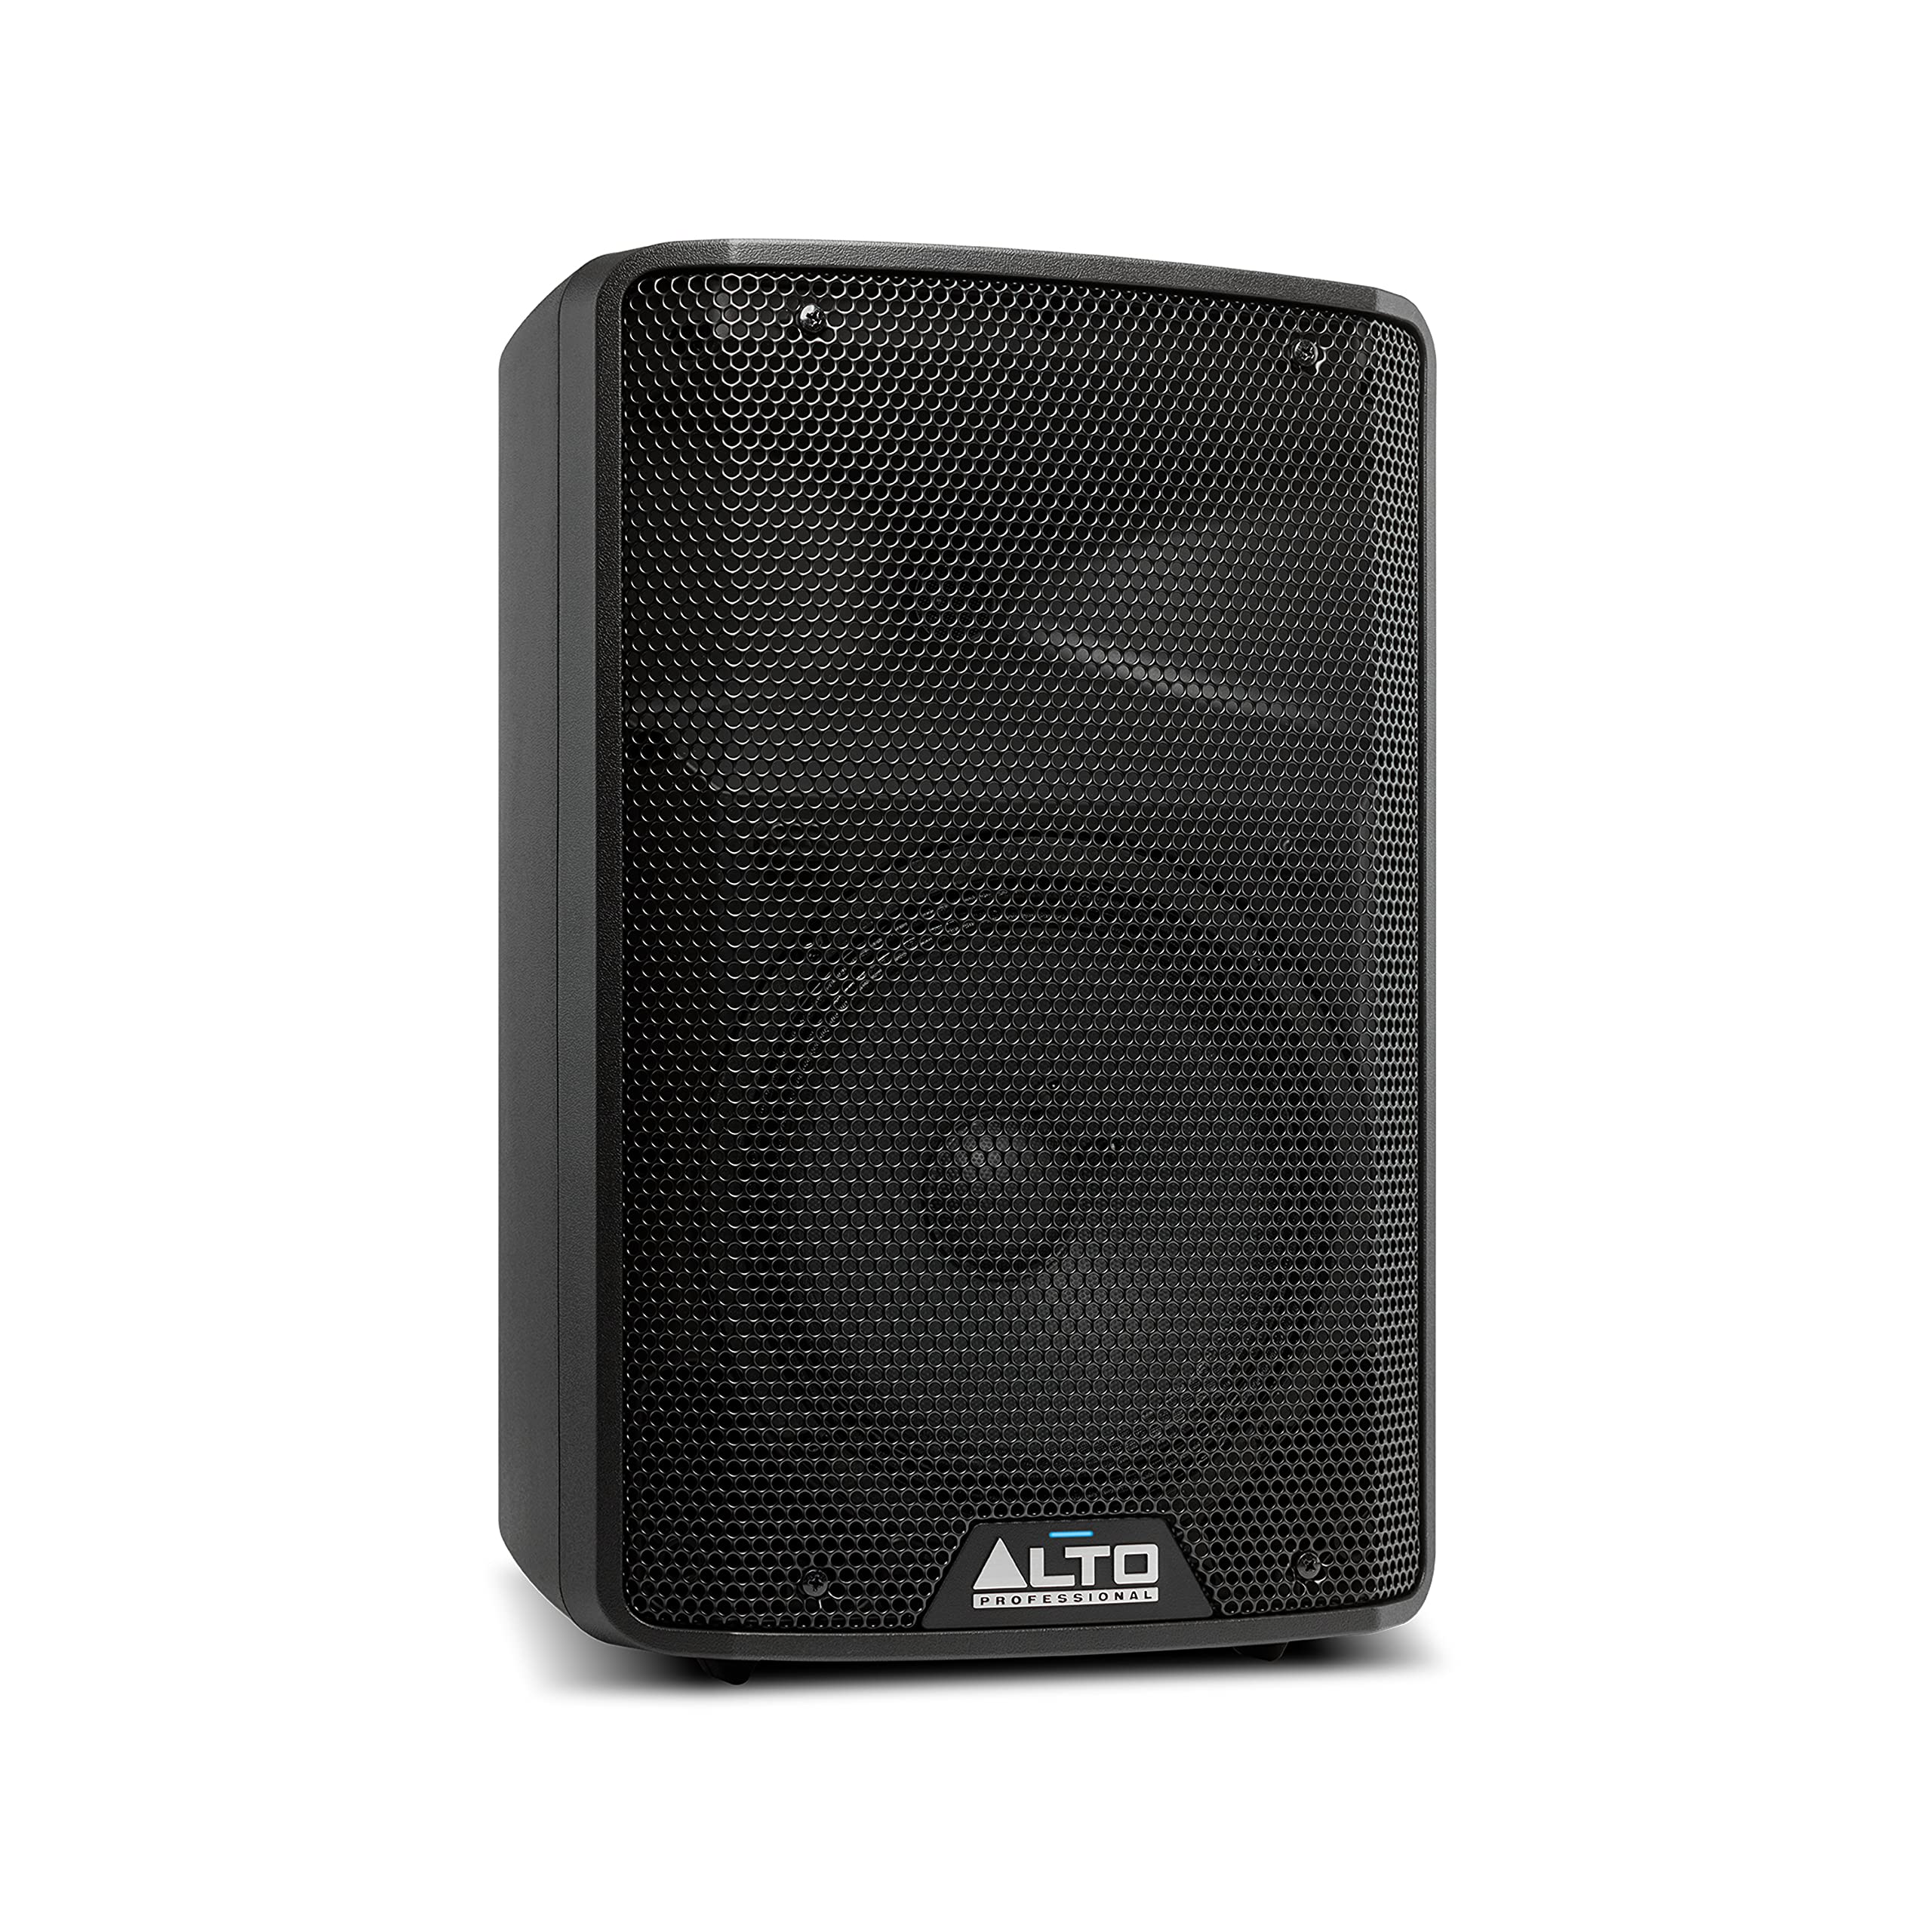  Alto Professional مكبر صوت PA مزود بمضخم صوت مقاس 8 بوصات لموسيقى الدي جي والموسيقيين والأماكن الصغيرة والاحتفالات وال...